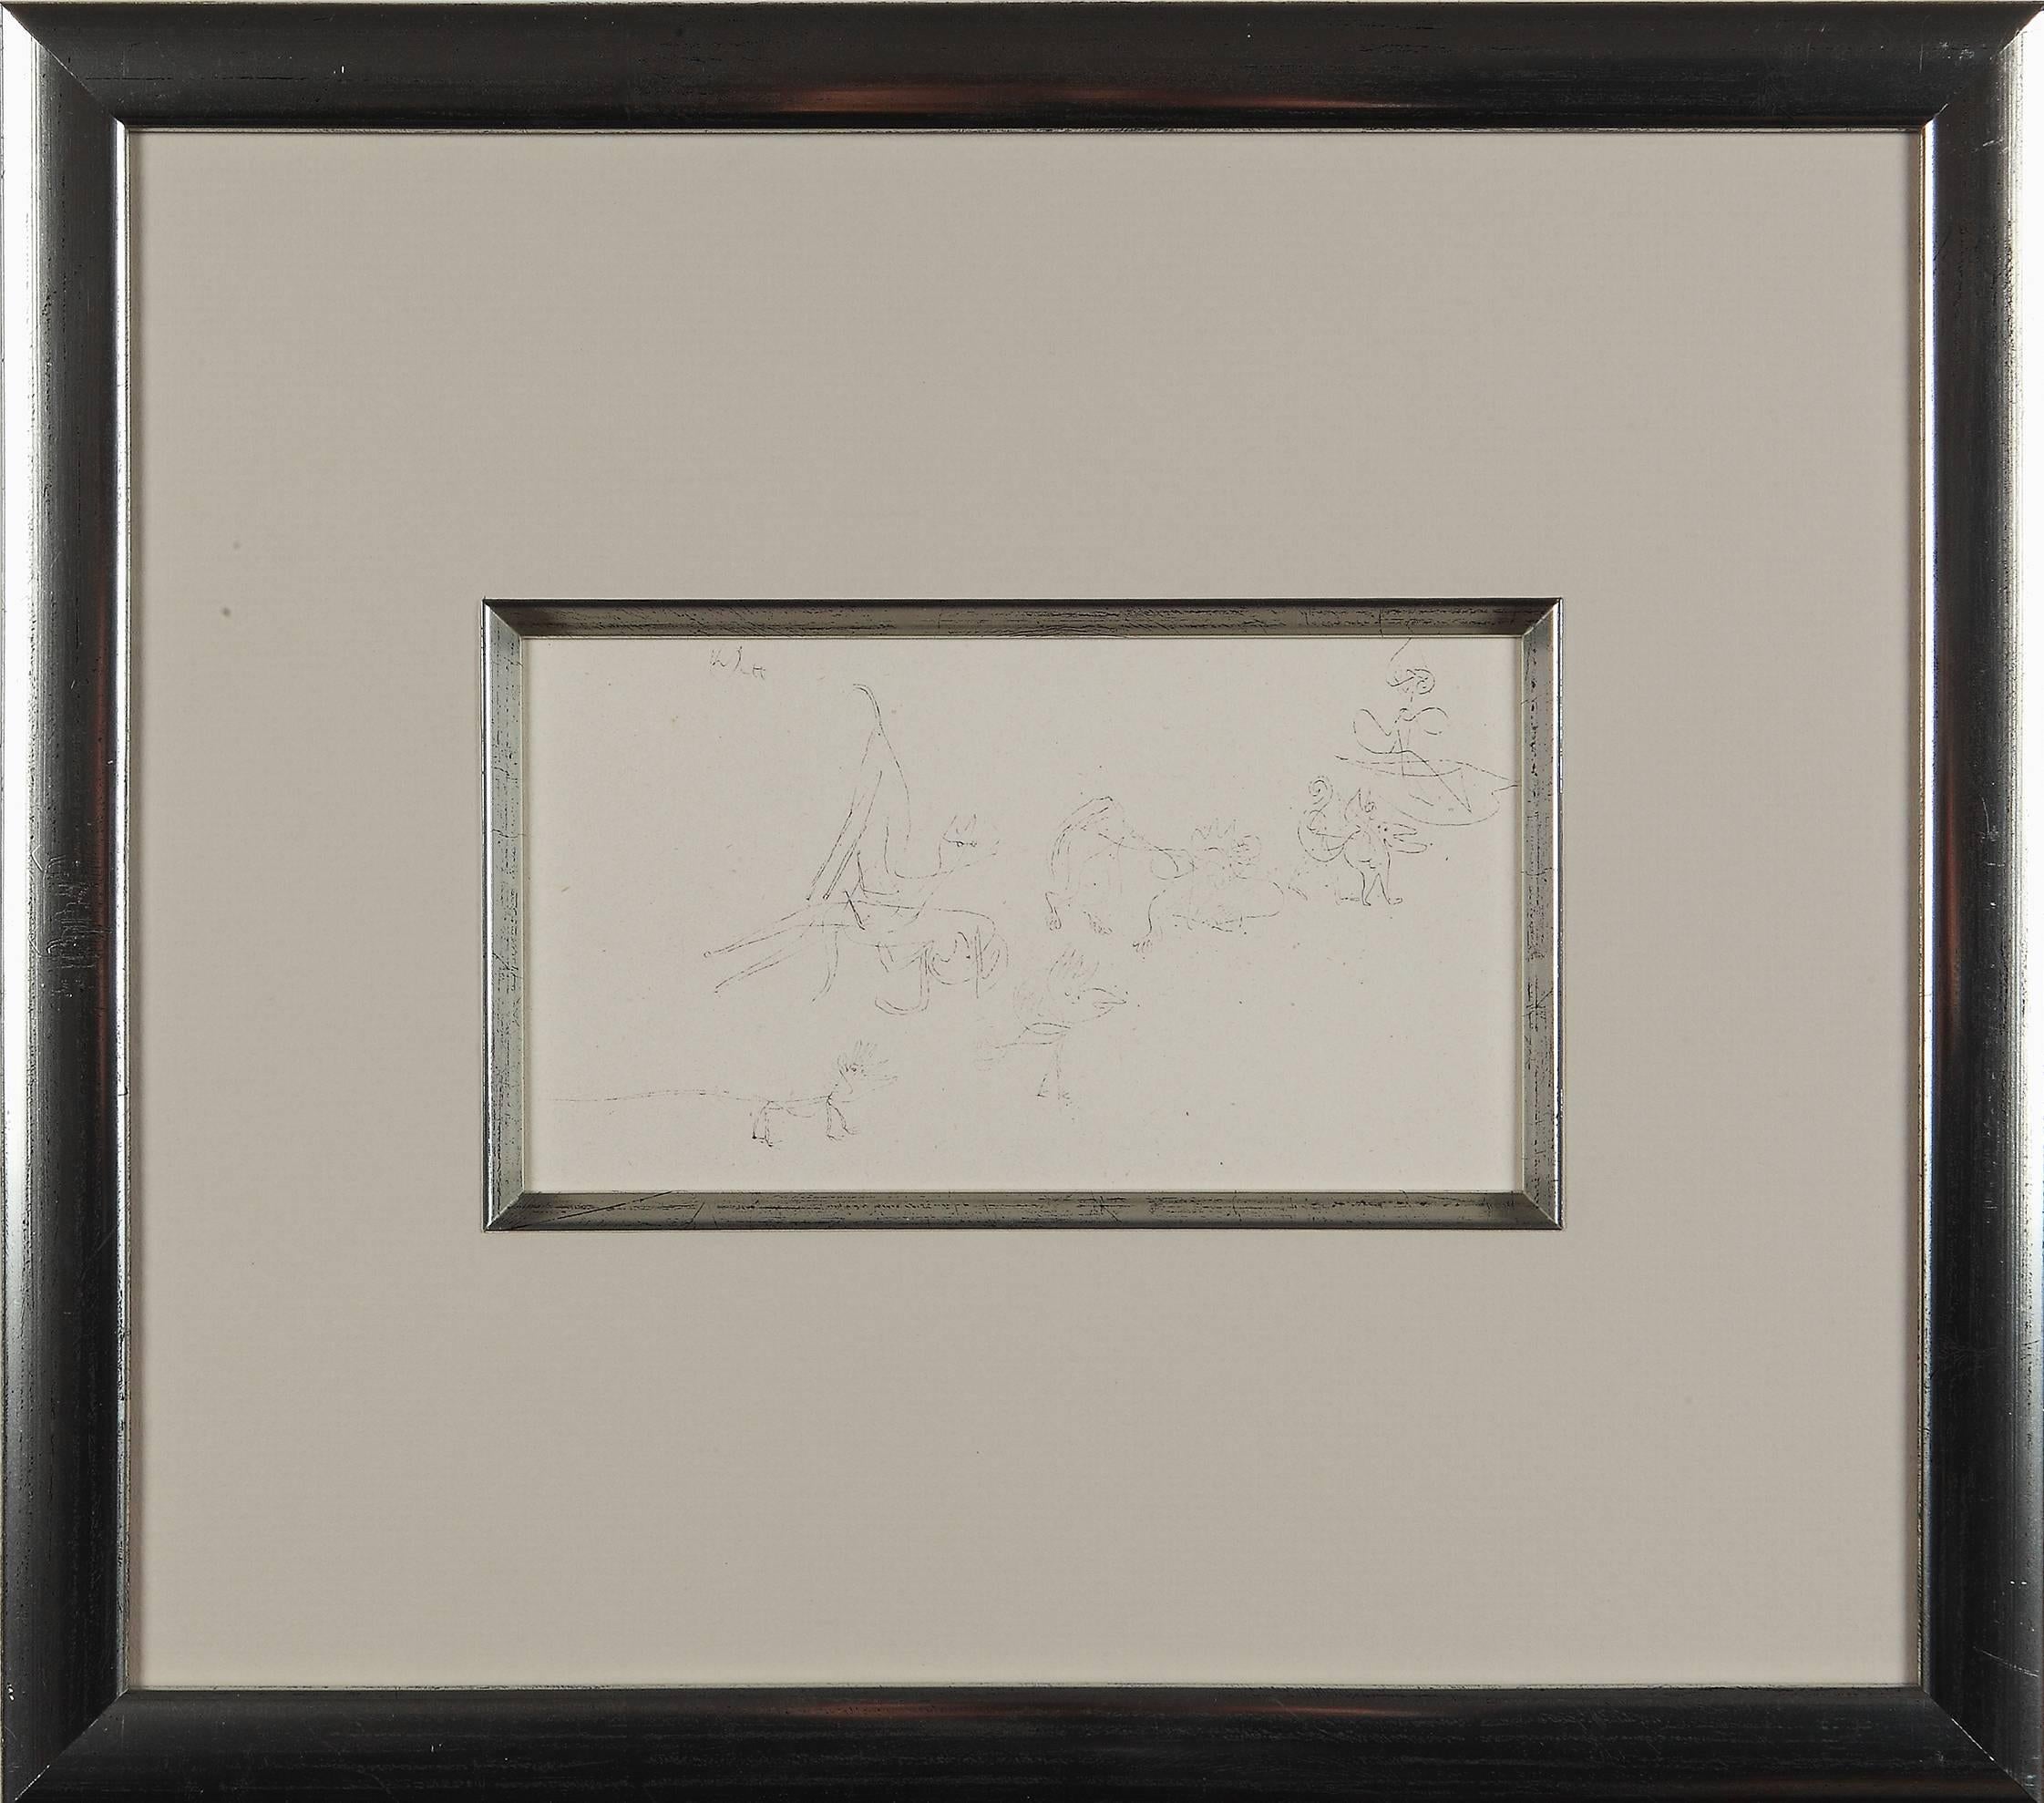 (after) Paul Klee Animal Print - Paul Klee Etching "Tiere auf der Wanderung"